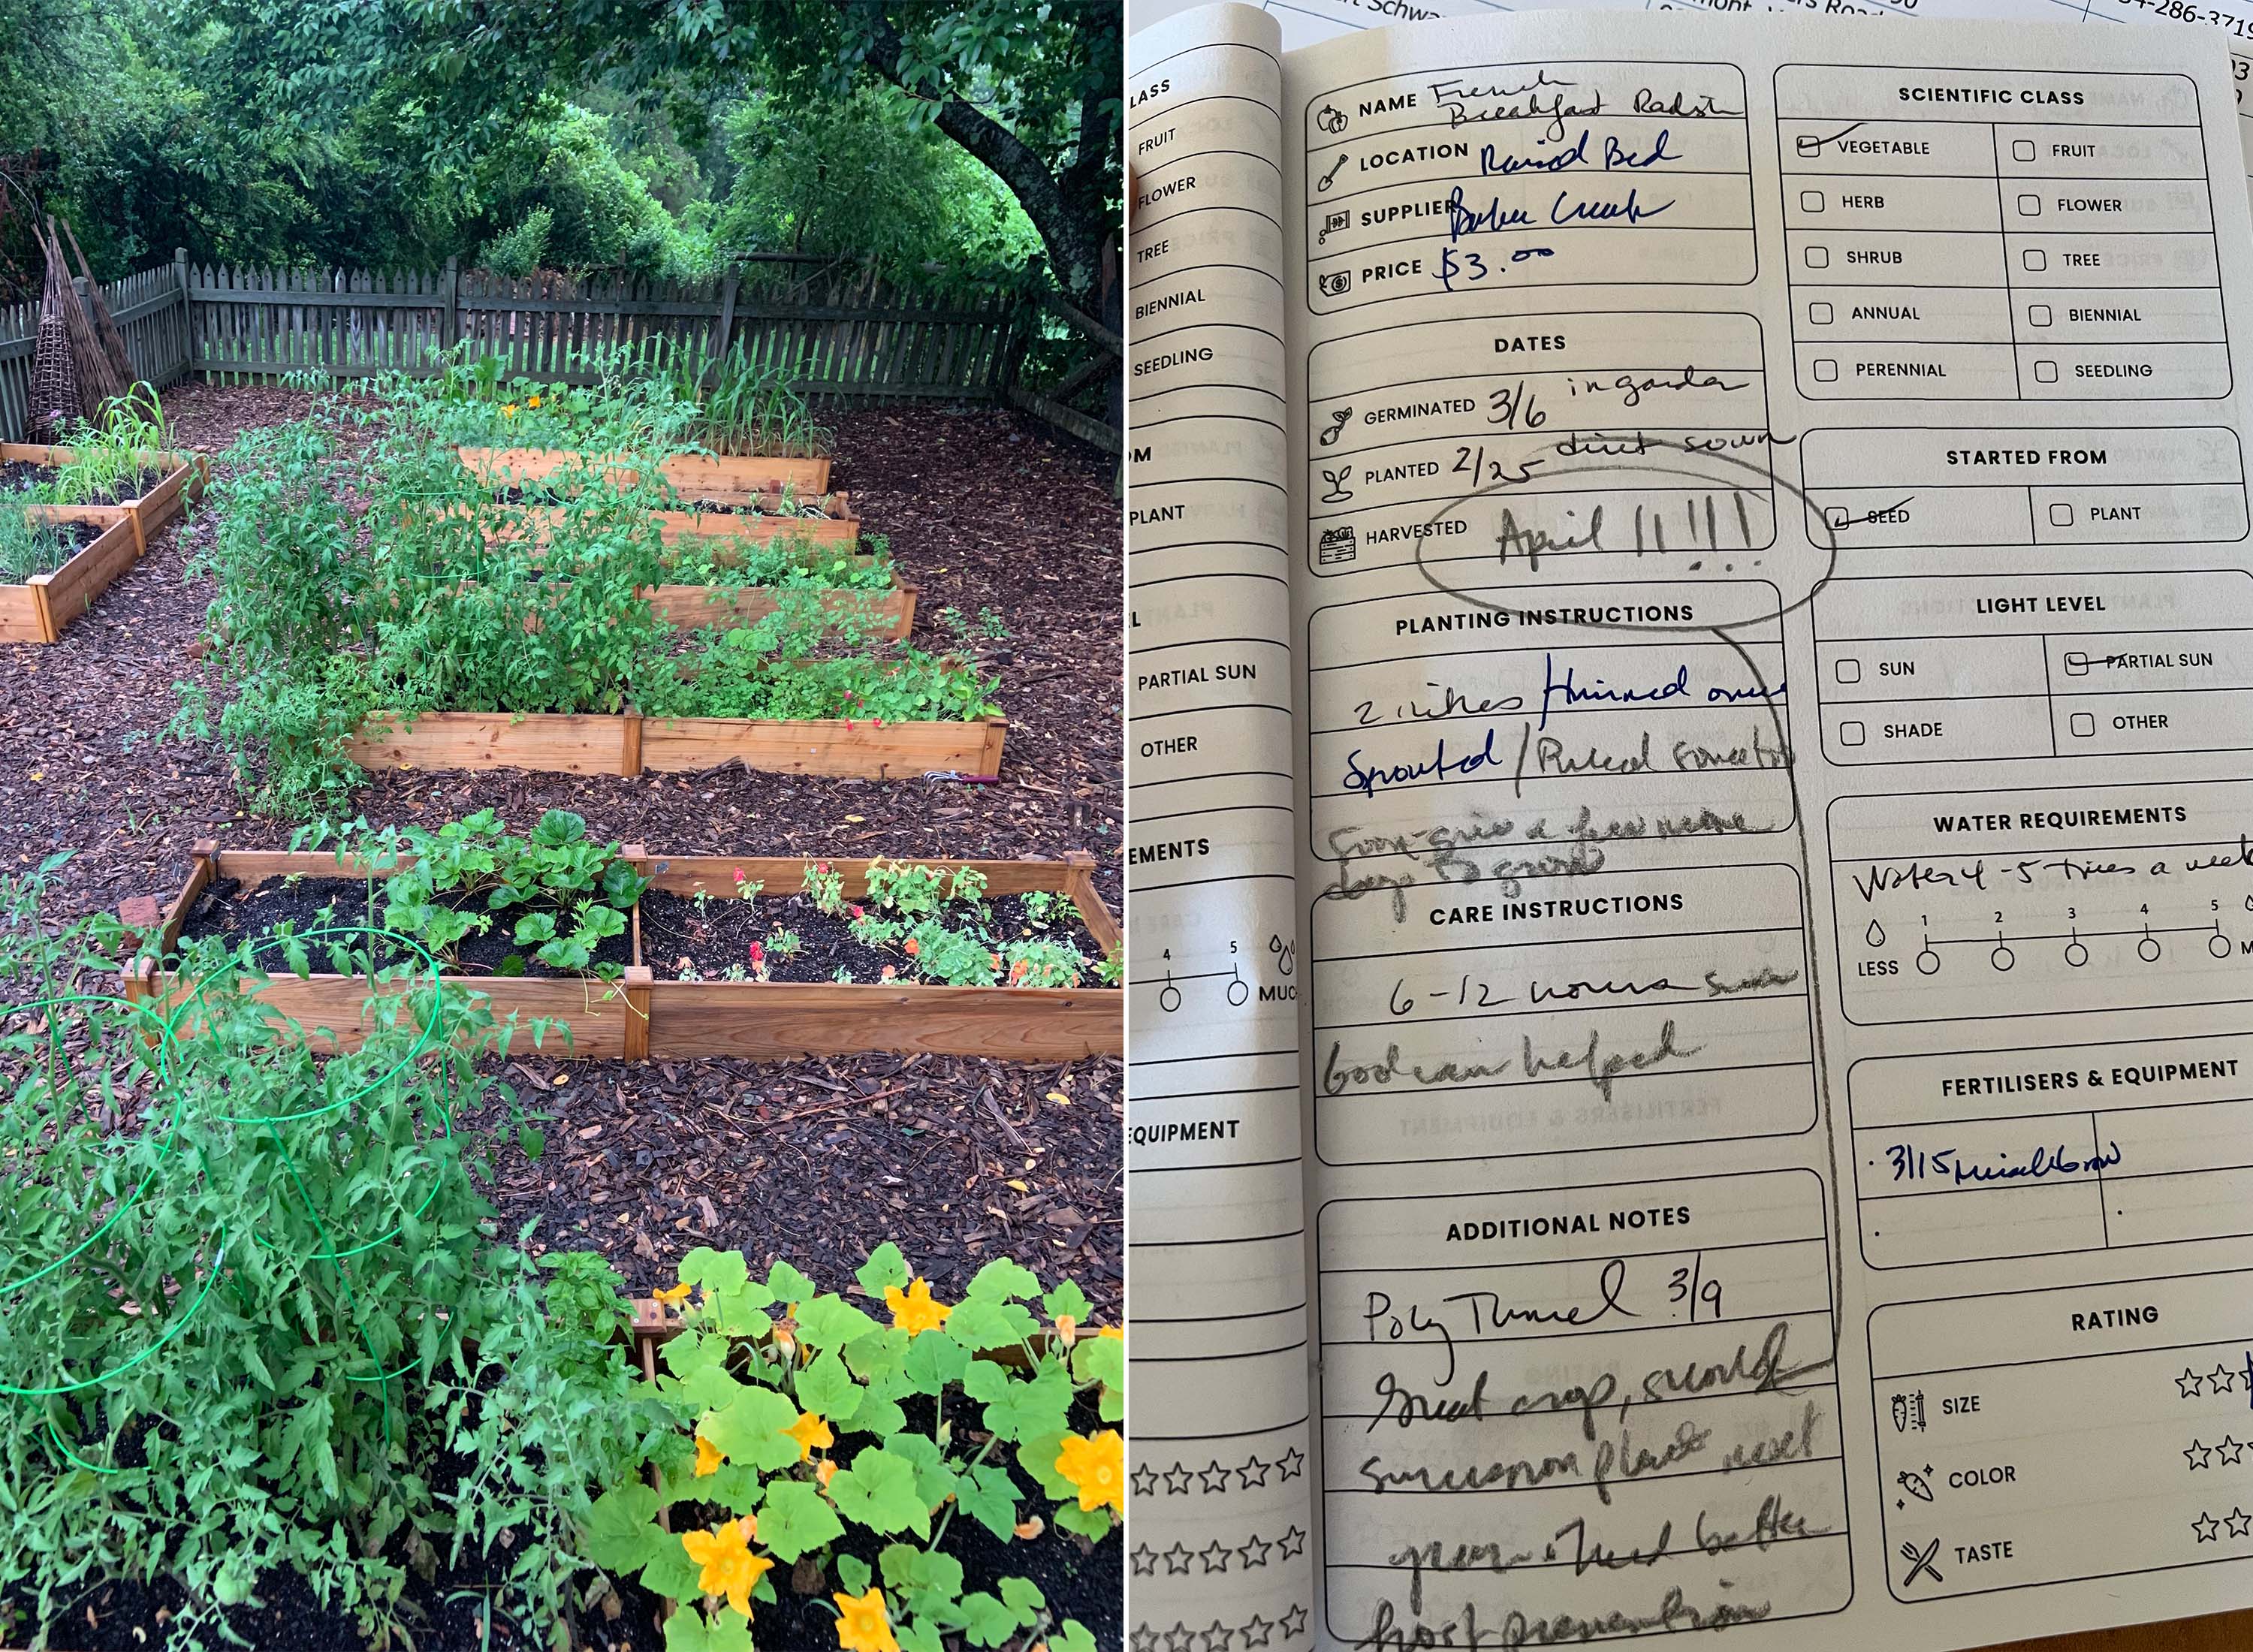 The Gardening Journal